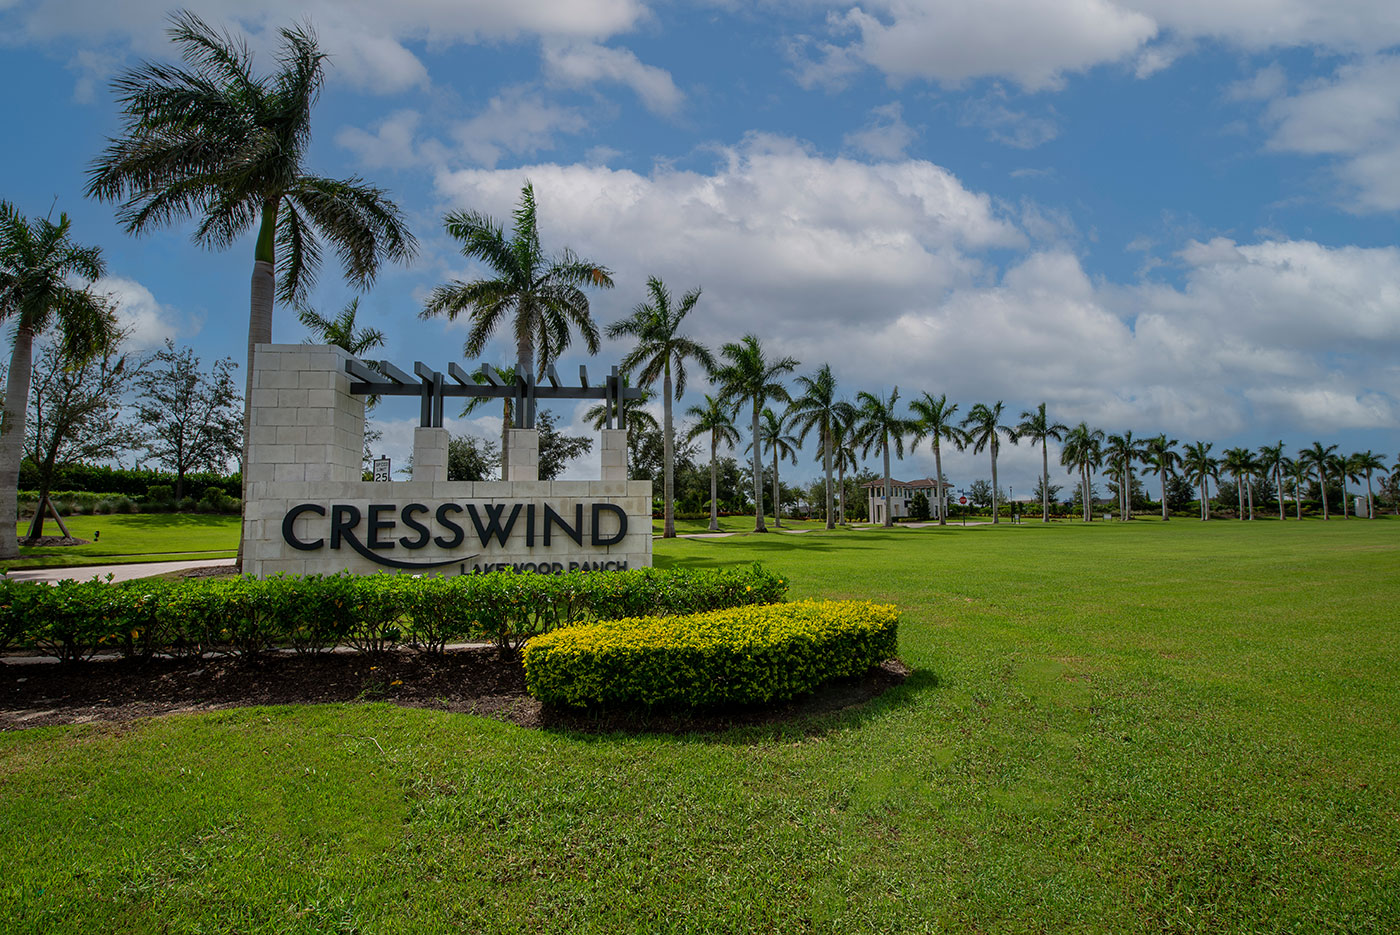 Cresswind